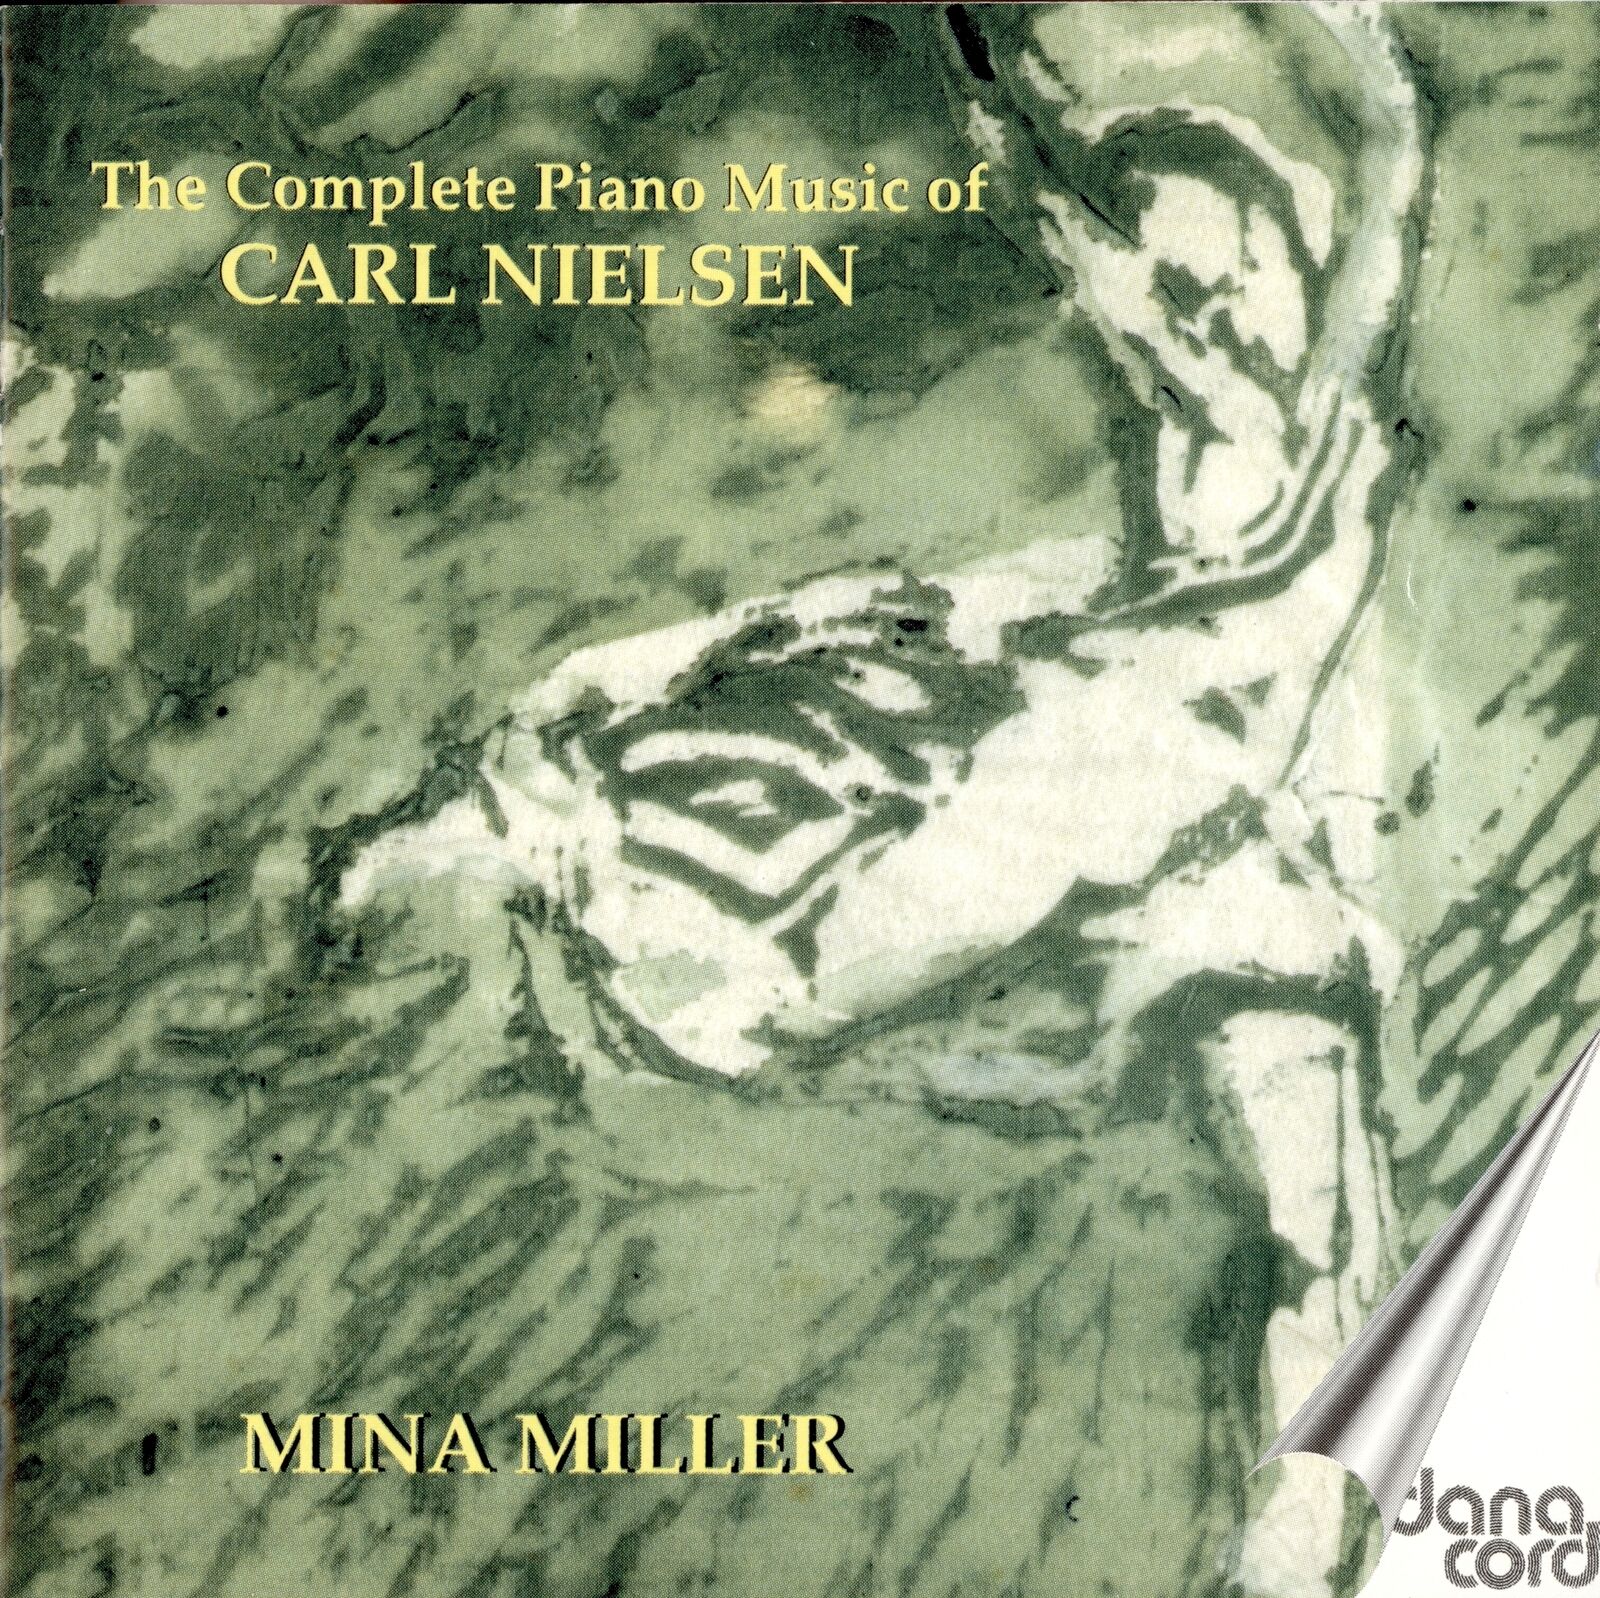 Carl Nielsen - Piano Music - Mina Miller (CD, 1998, 2 Discs, danacord)